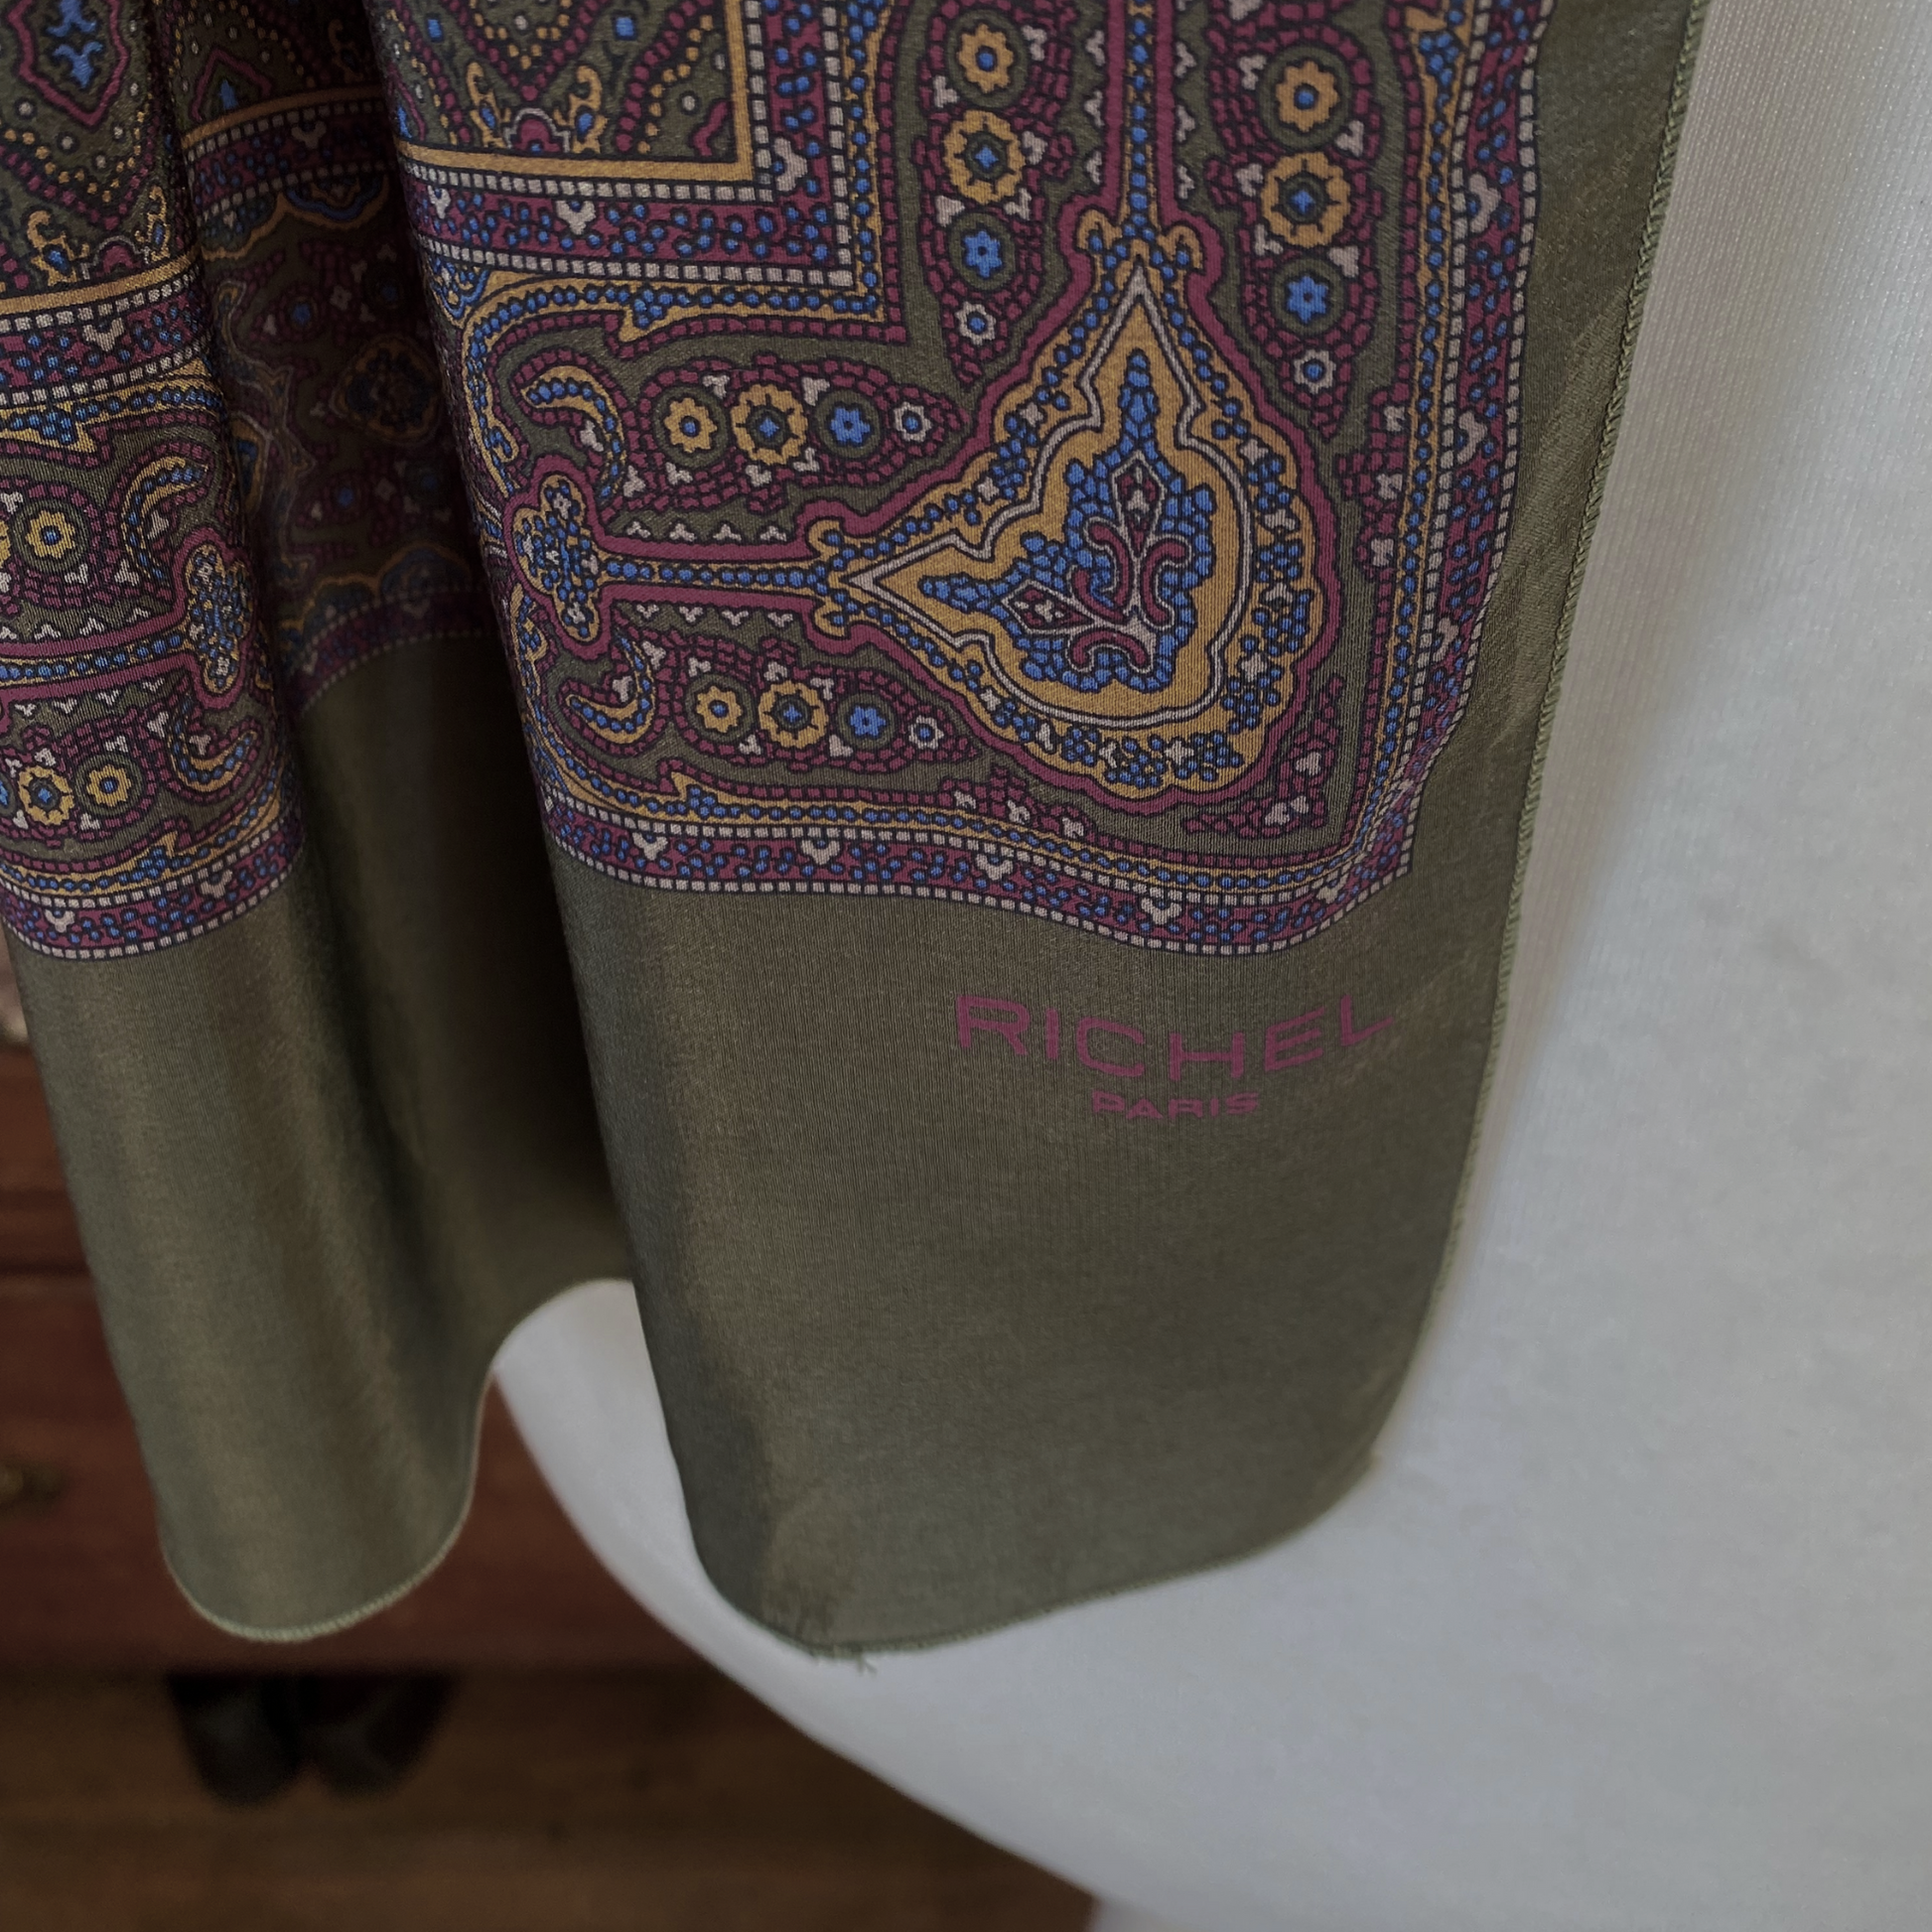 Vintage paisley silk vintage scarf by Richel Paris. Great gift idea 